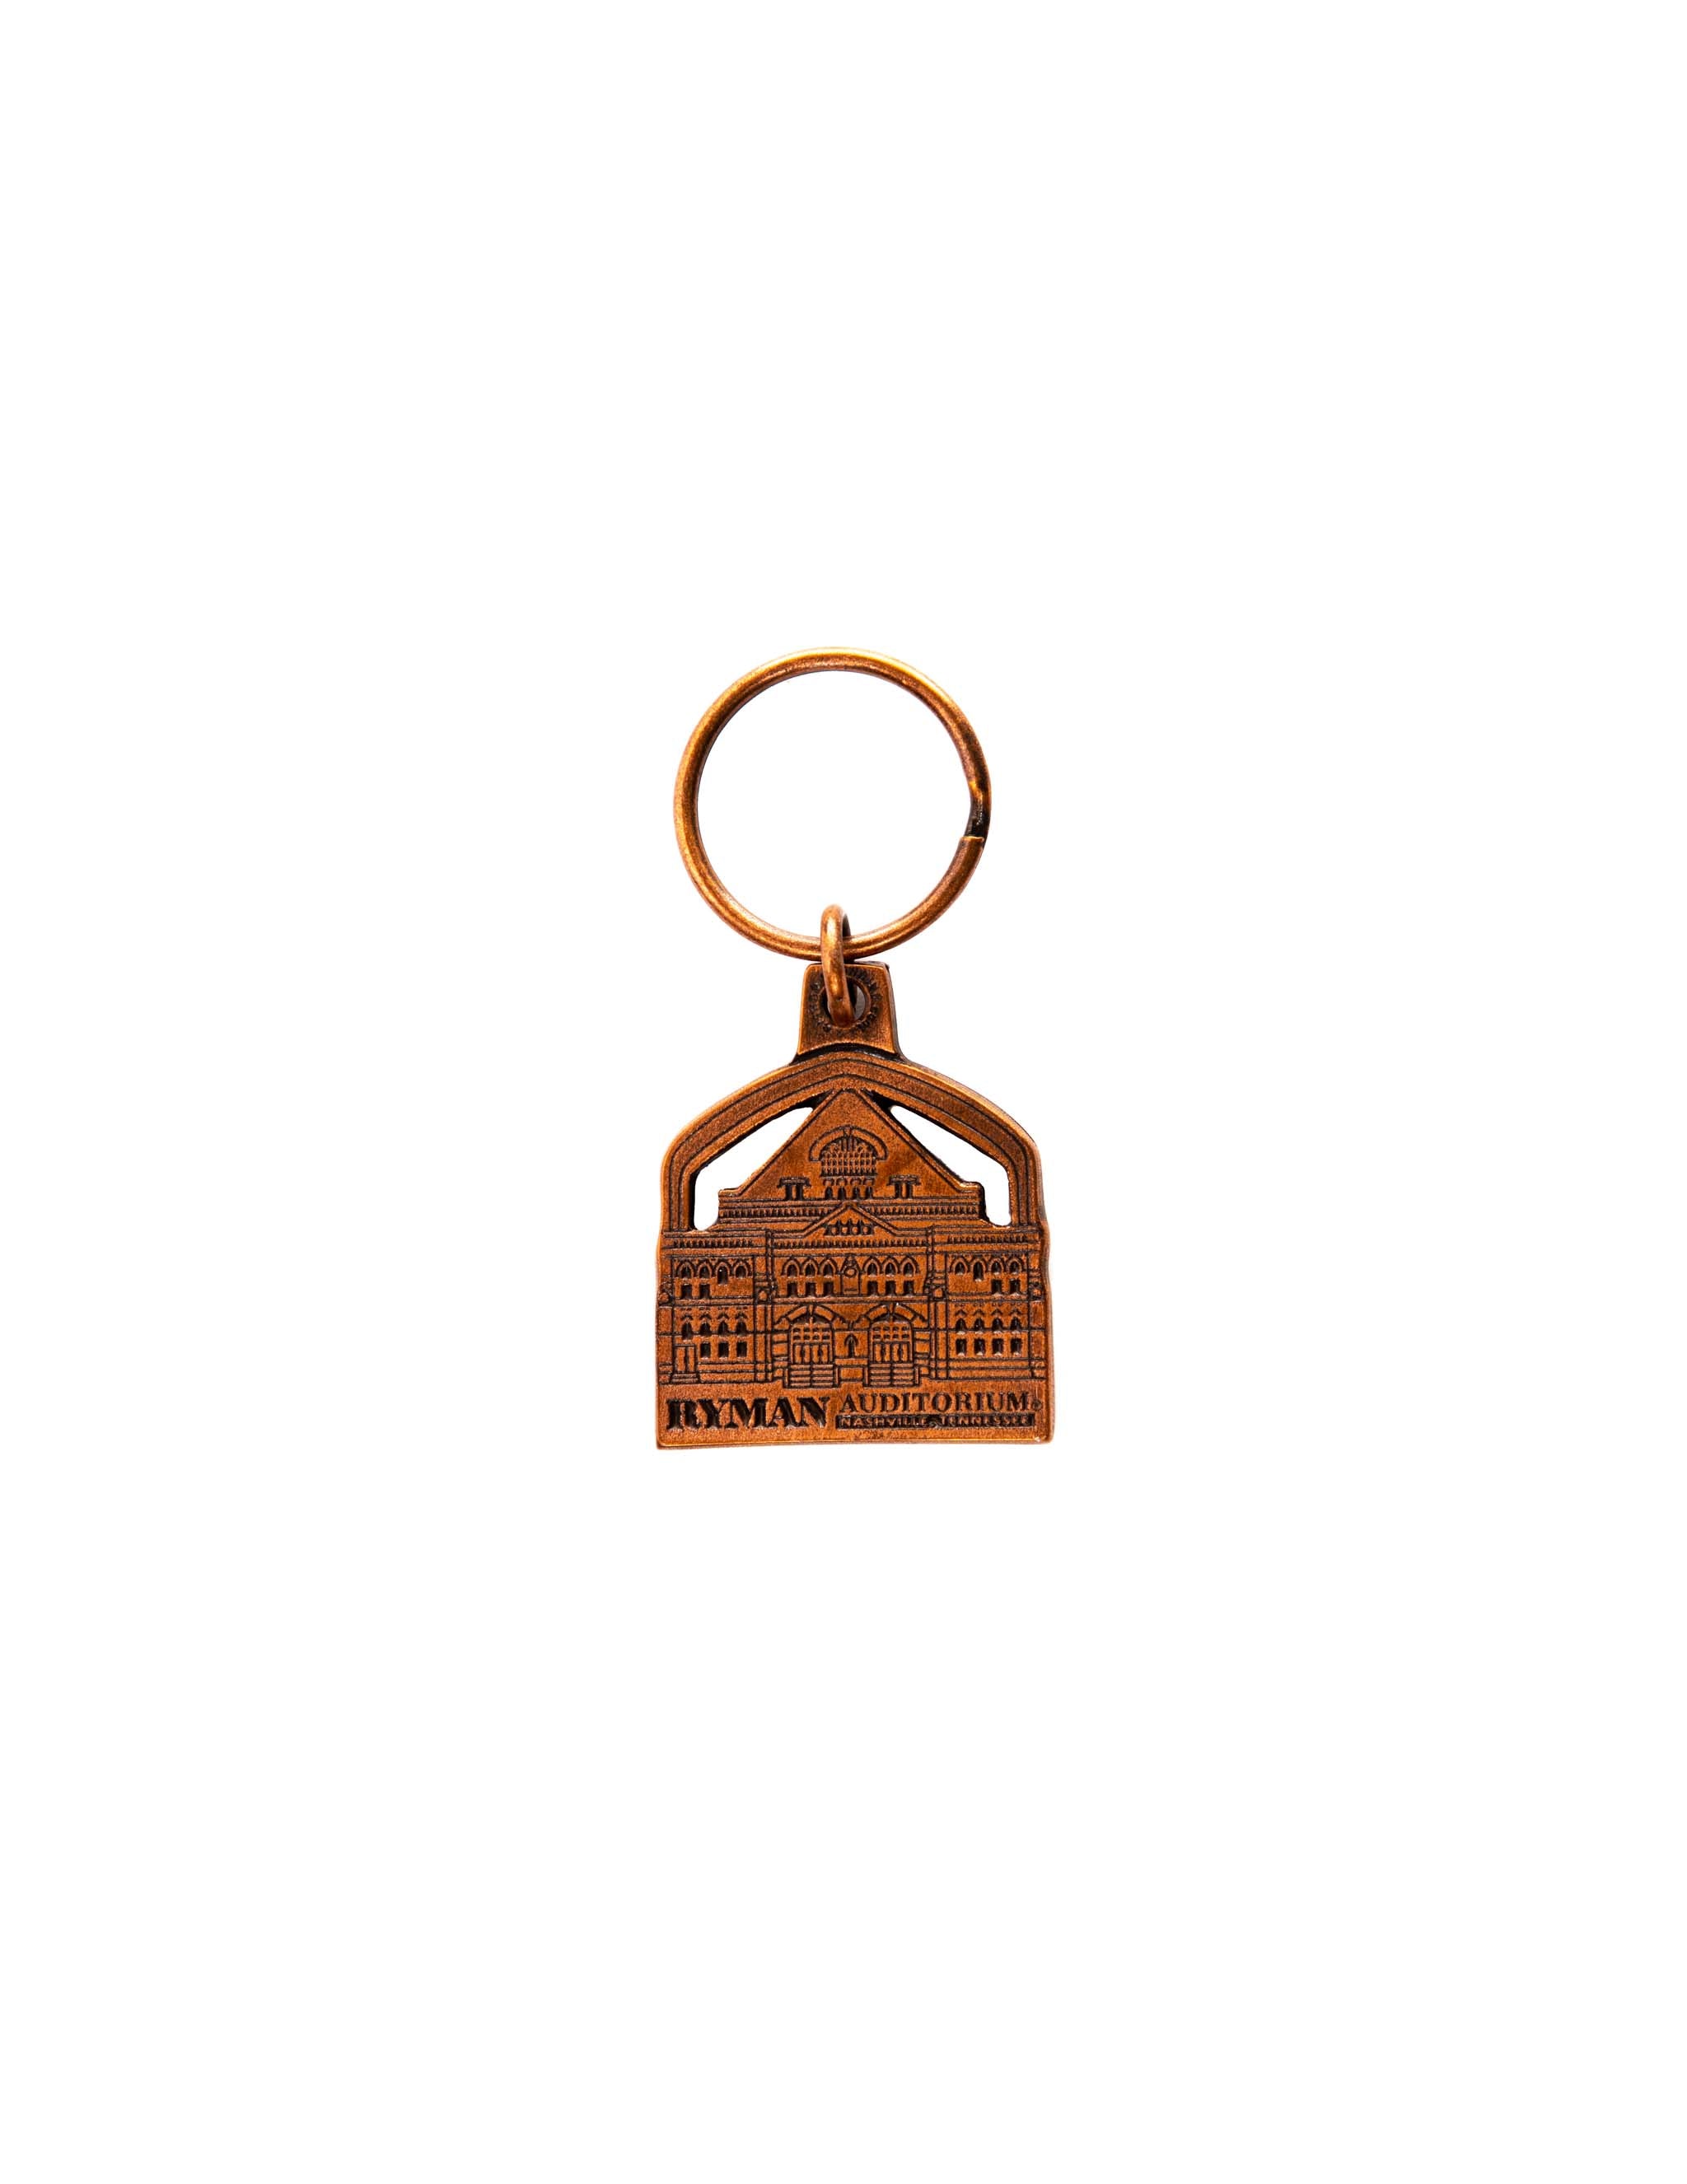 Ryman Antique Brass Building Keychain